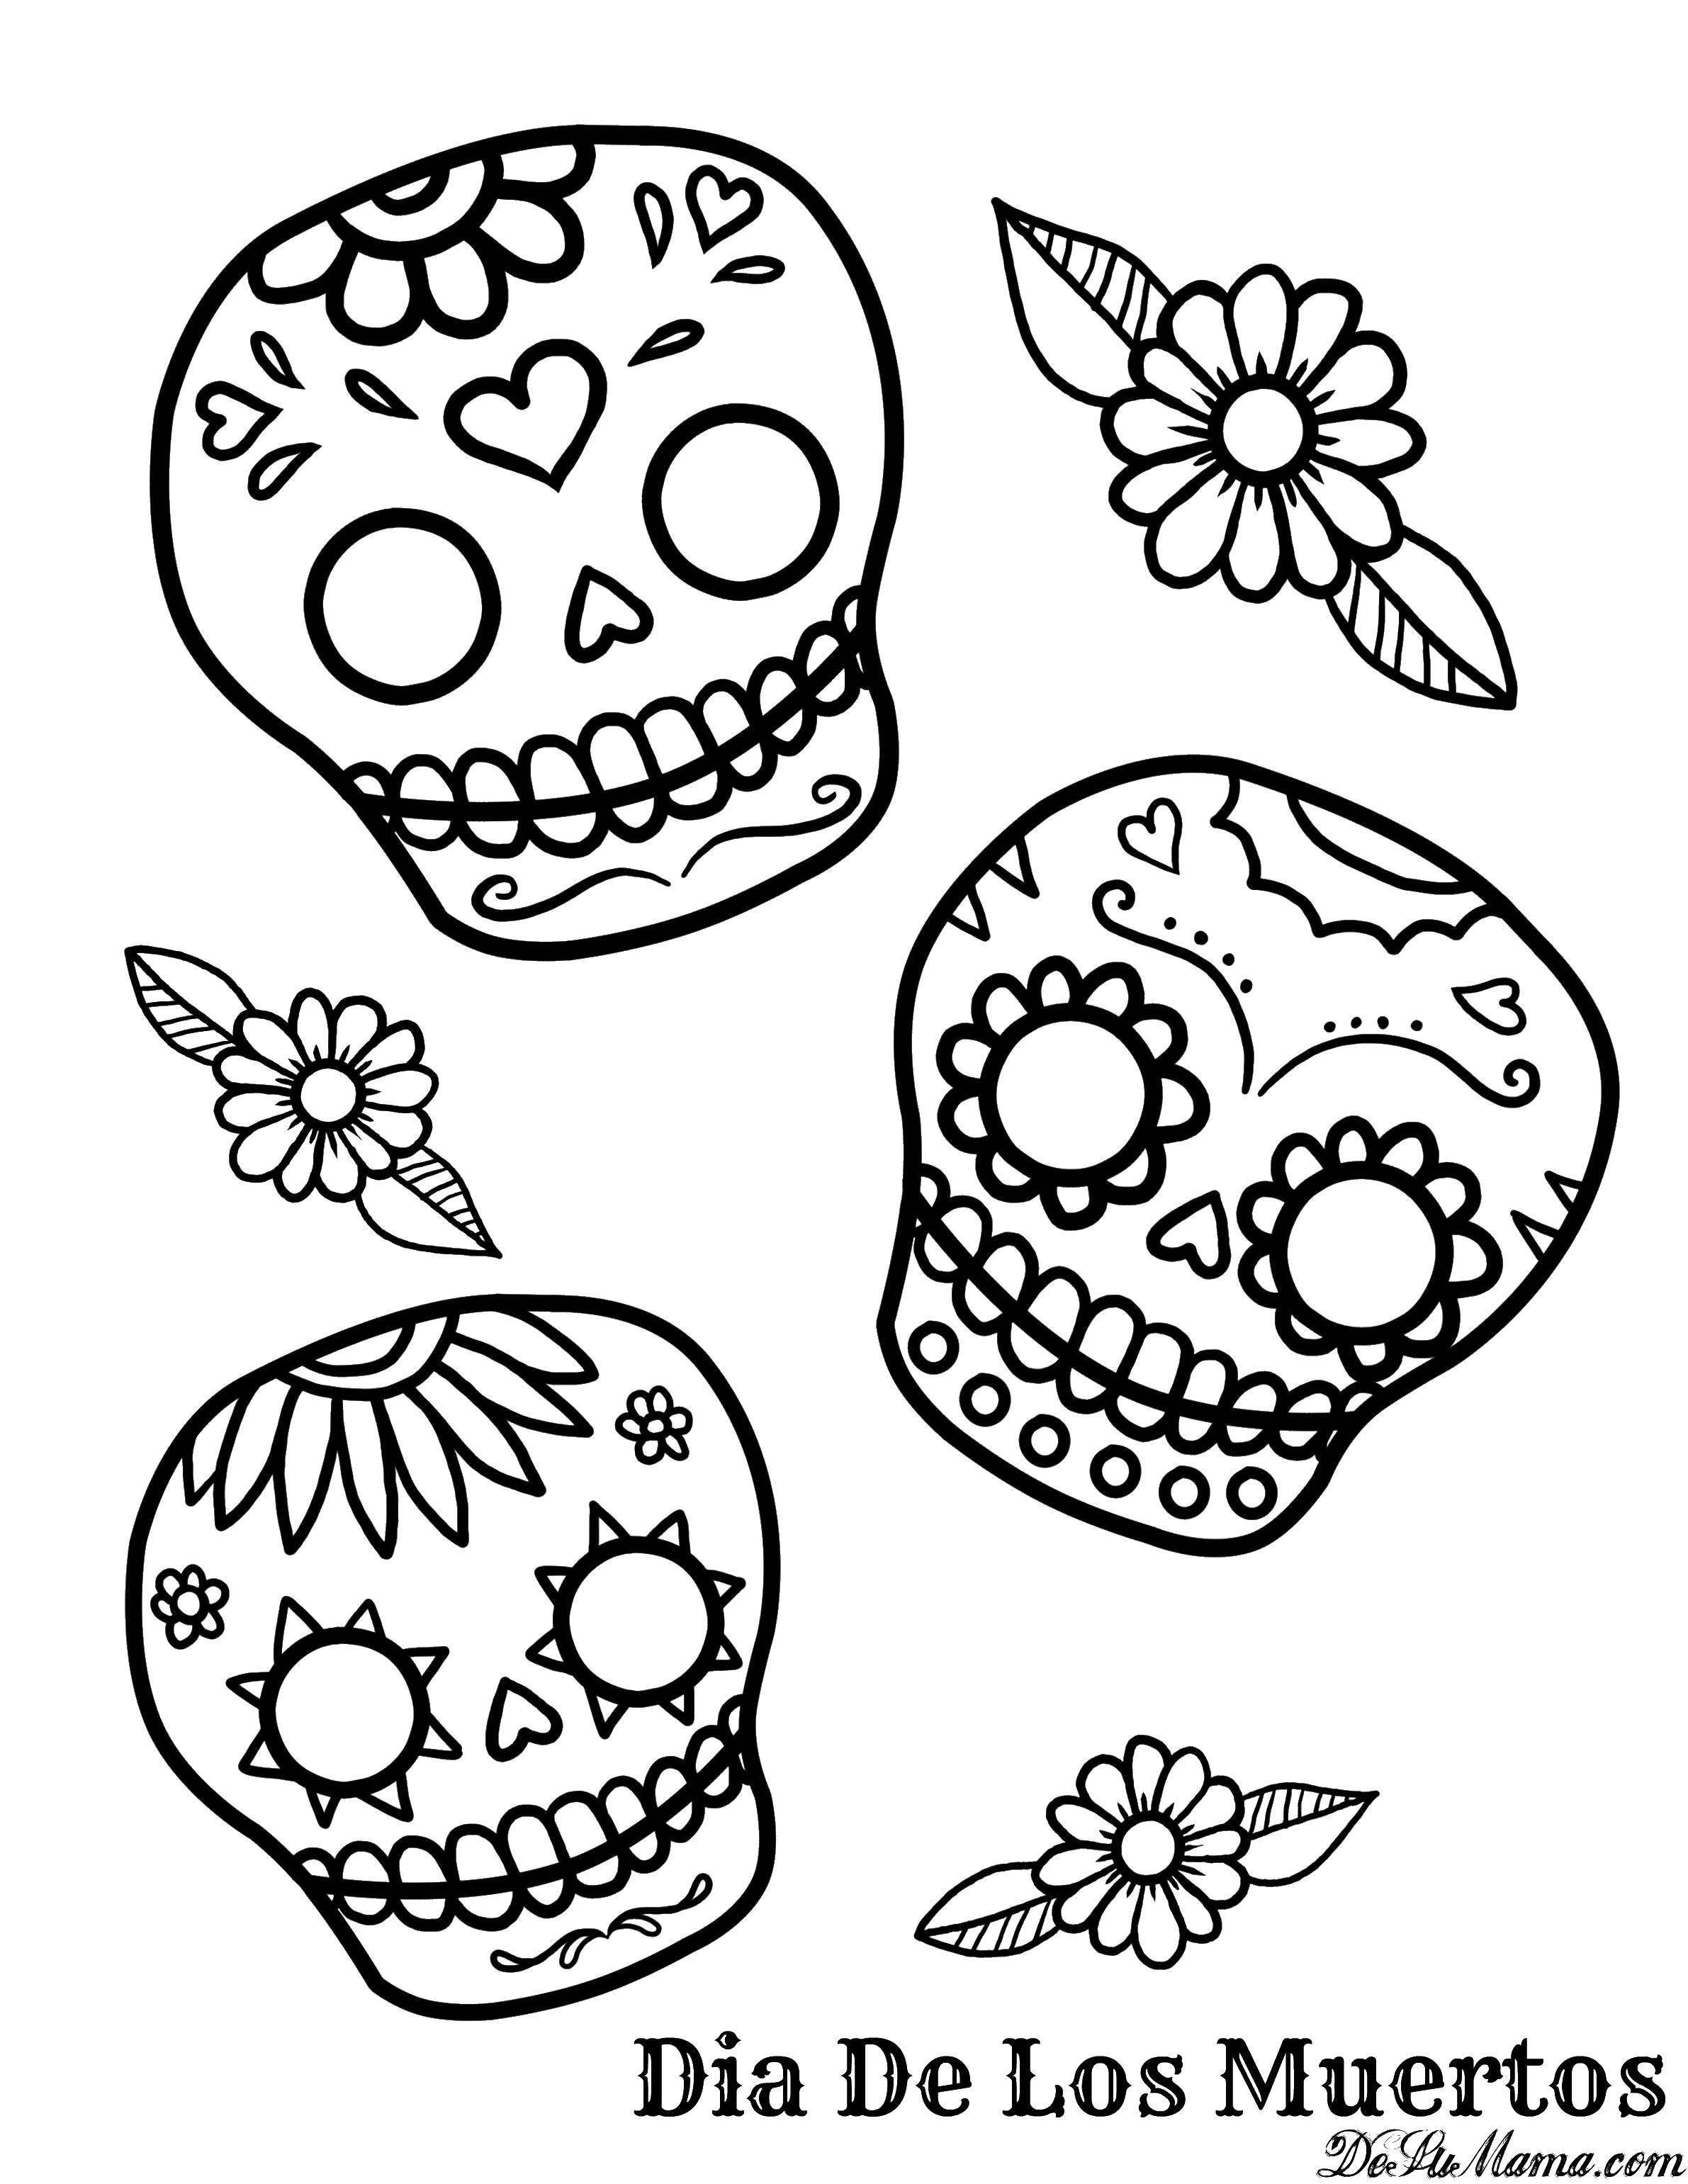 Coloring Three beautiful skull. Category Skull. Tags:  skull, patterns, flowers.